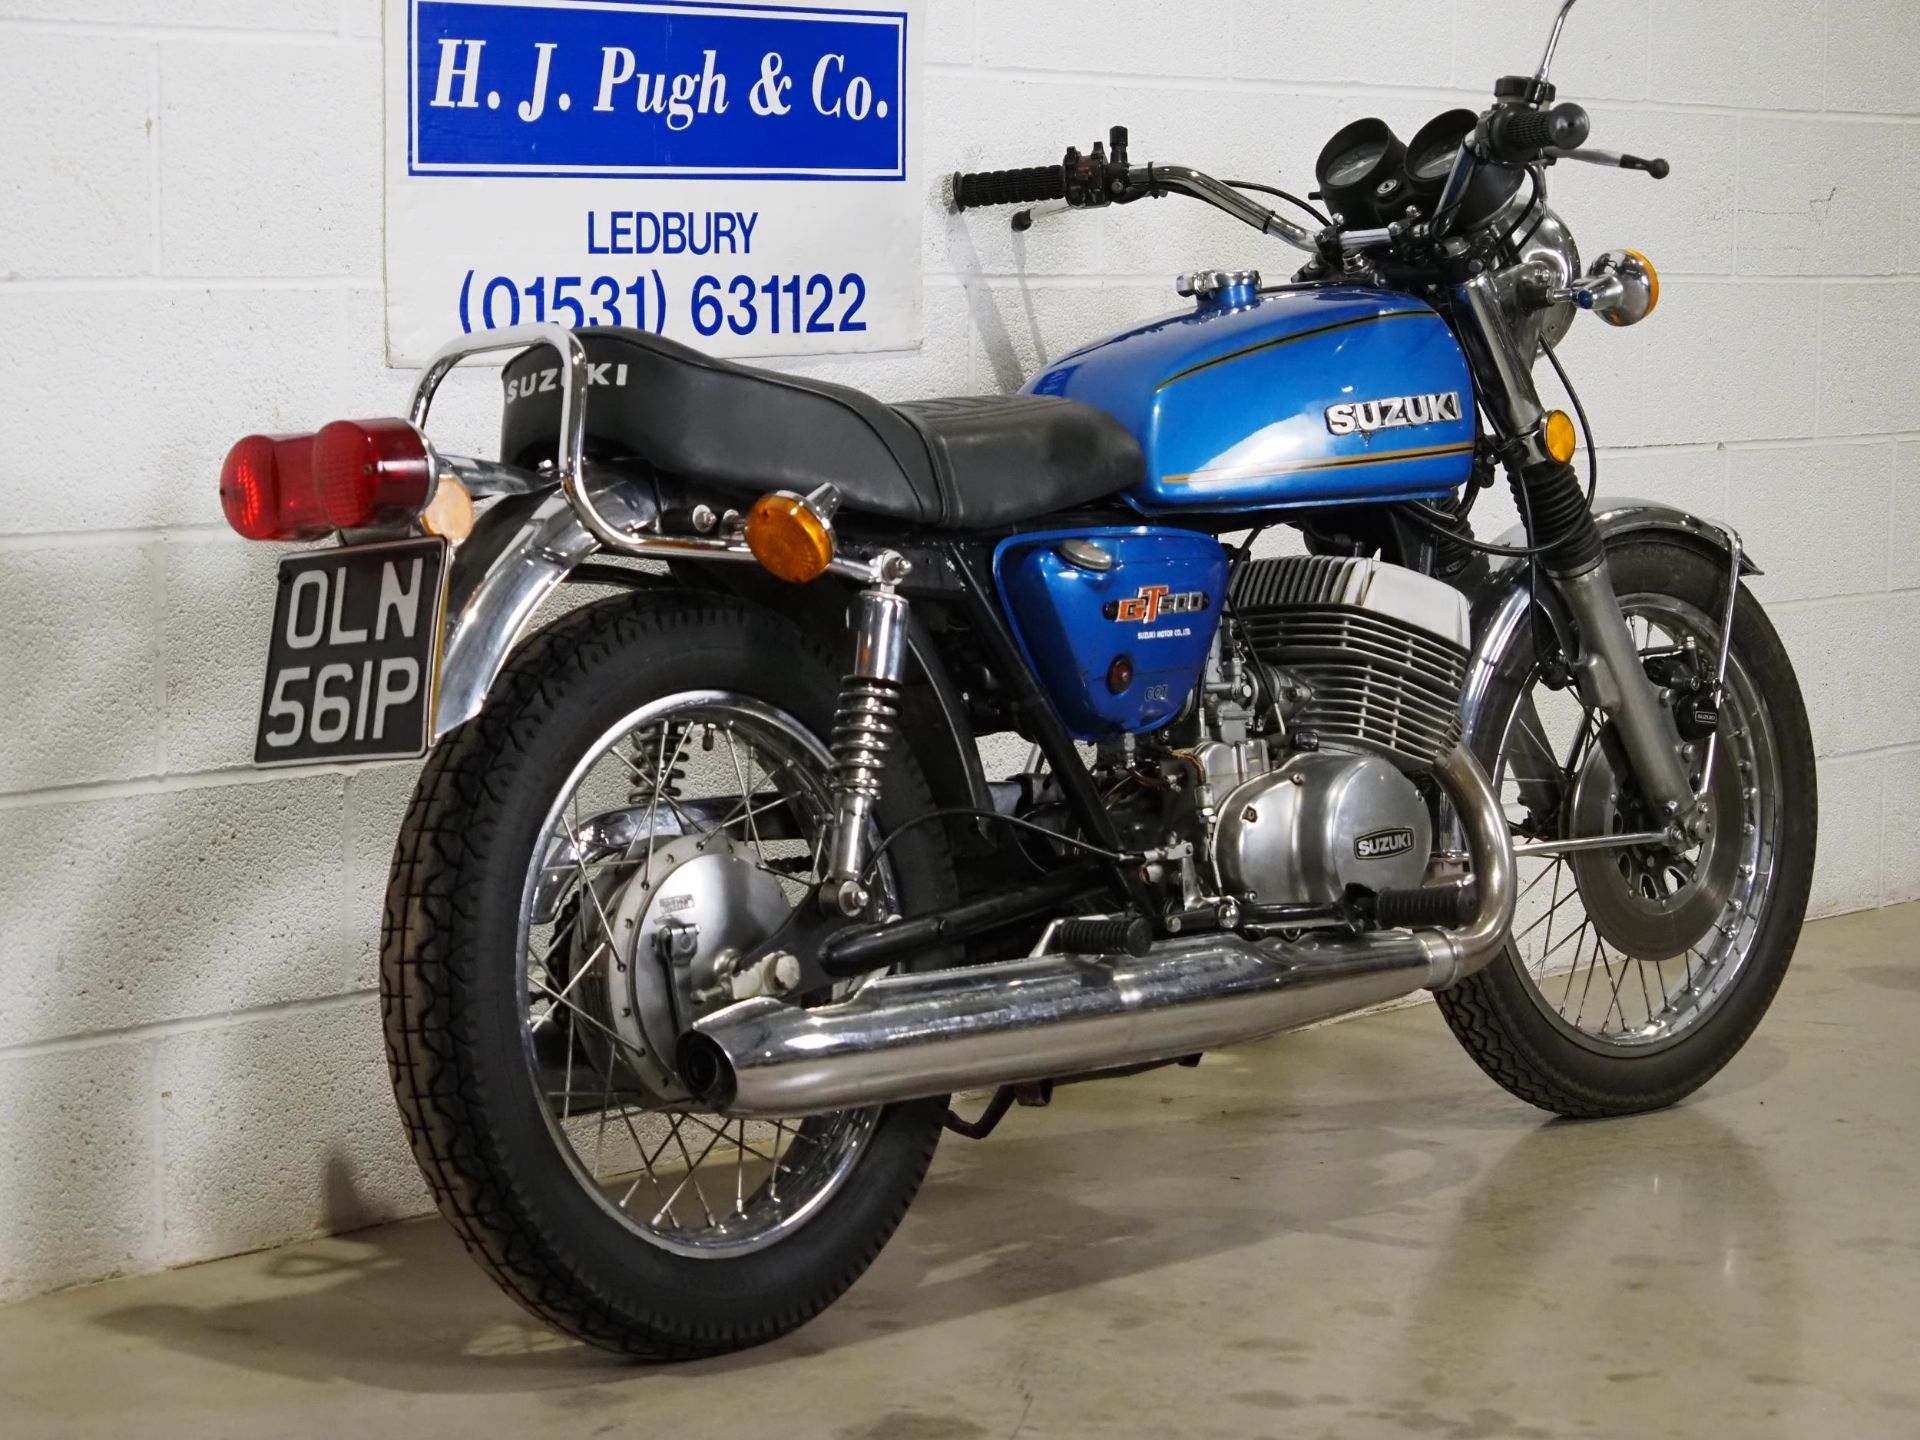 Suzuki GT500 motorcycle. 1976. 493cc. Frame No.100193 Engine No. 100445 UK supplied bike. Runs and - Image 4 of 7